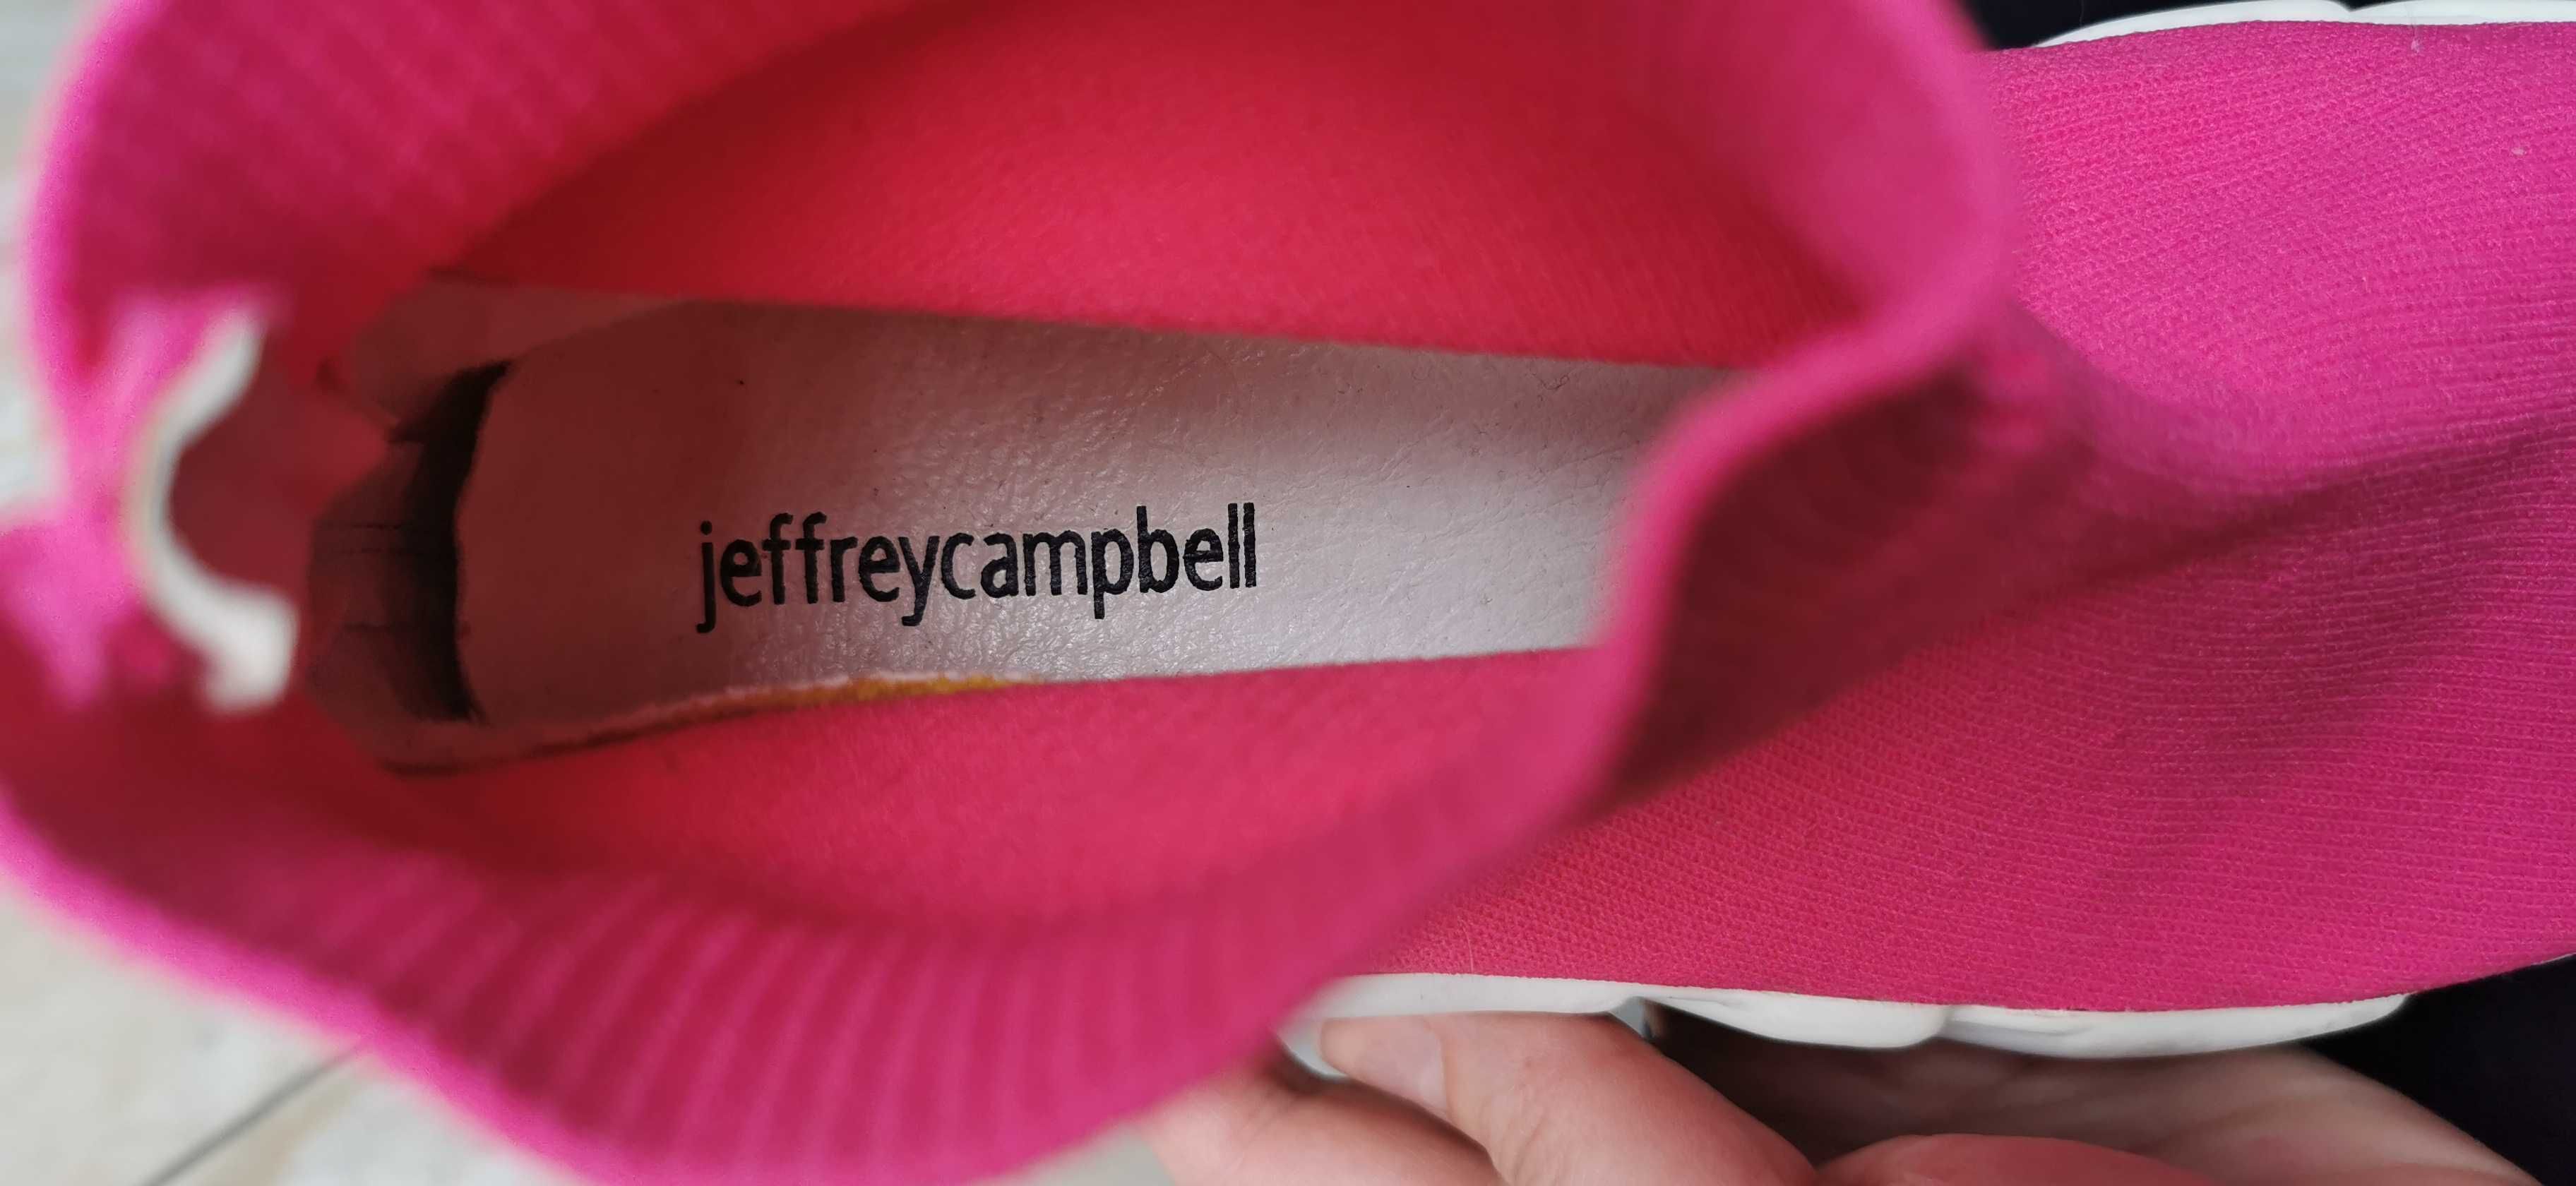 Buty Jeffrey Campbell 38